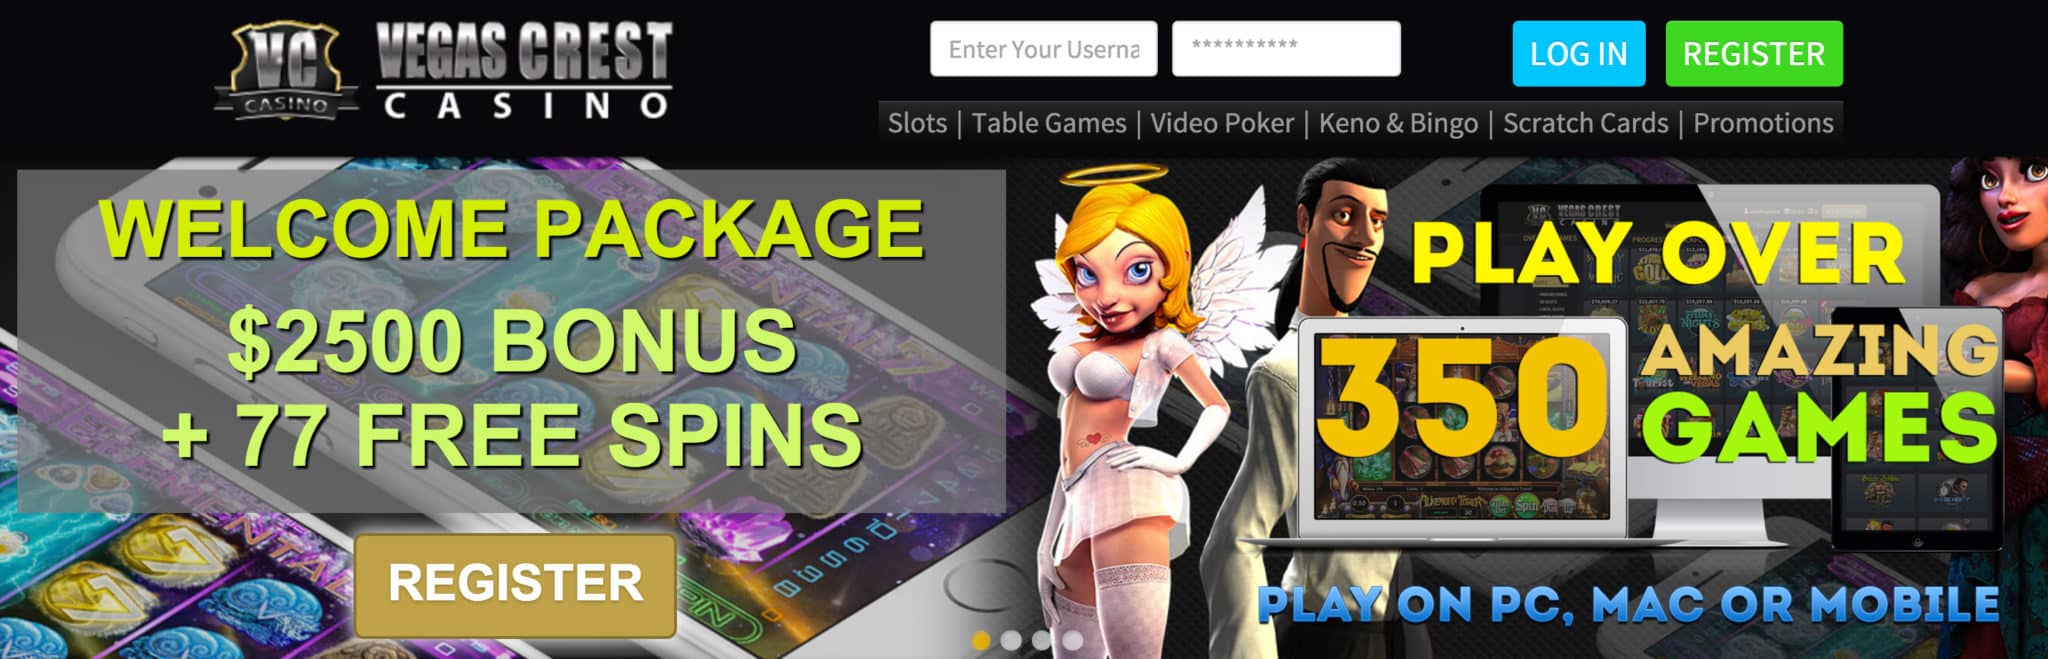 vegas crest online casino